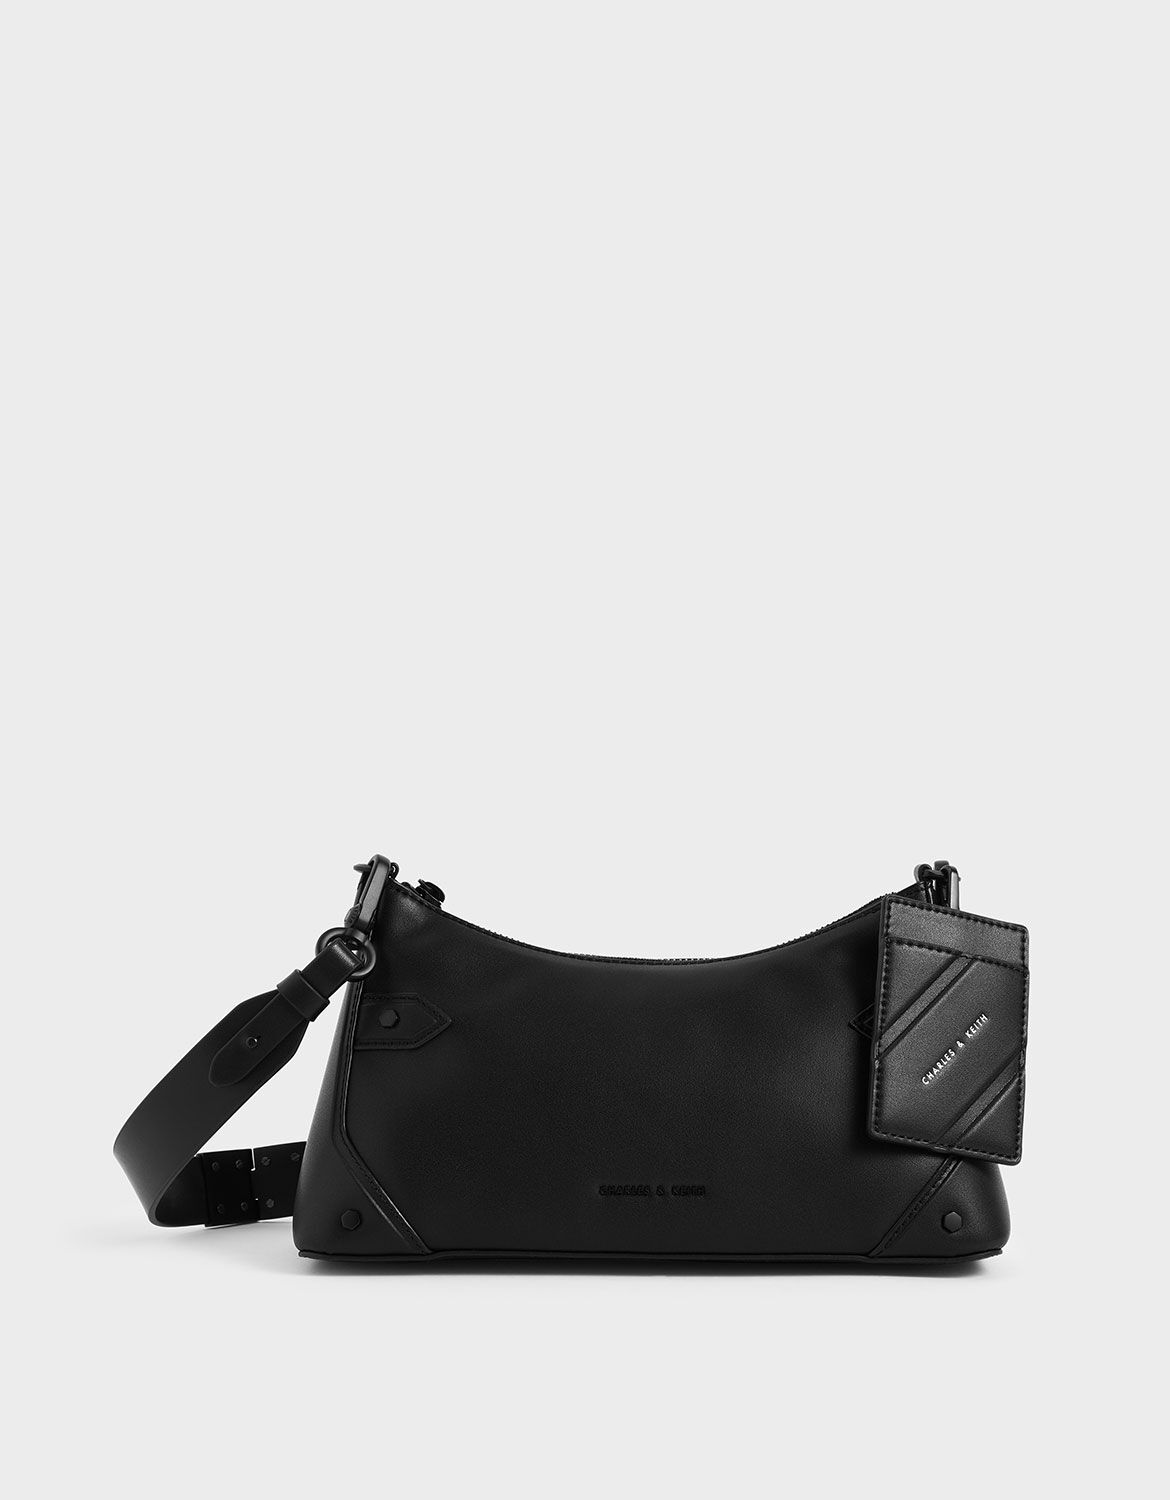 Ultra Matte Black Chain Handle Shoulder Bag | CHARLES & KEITH